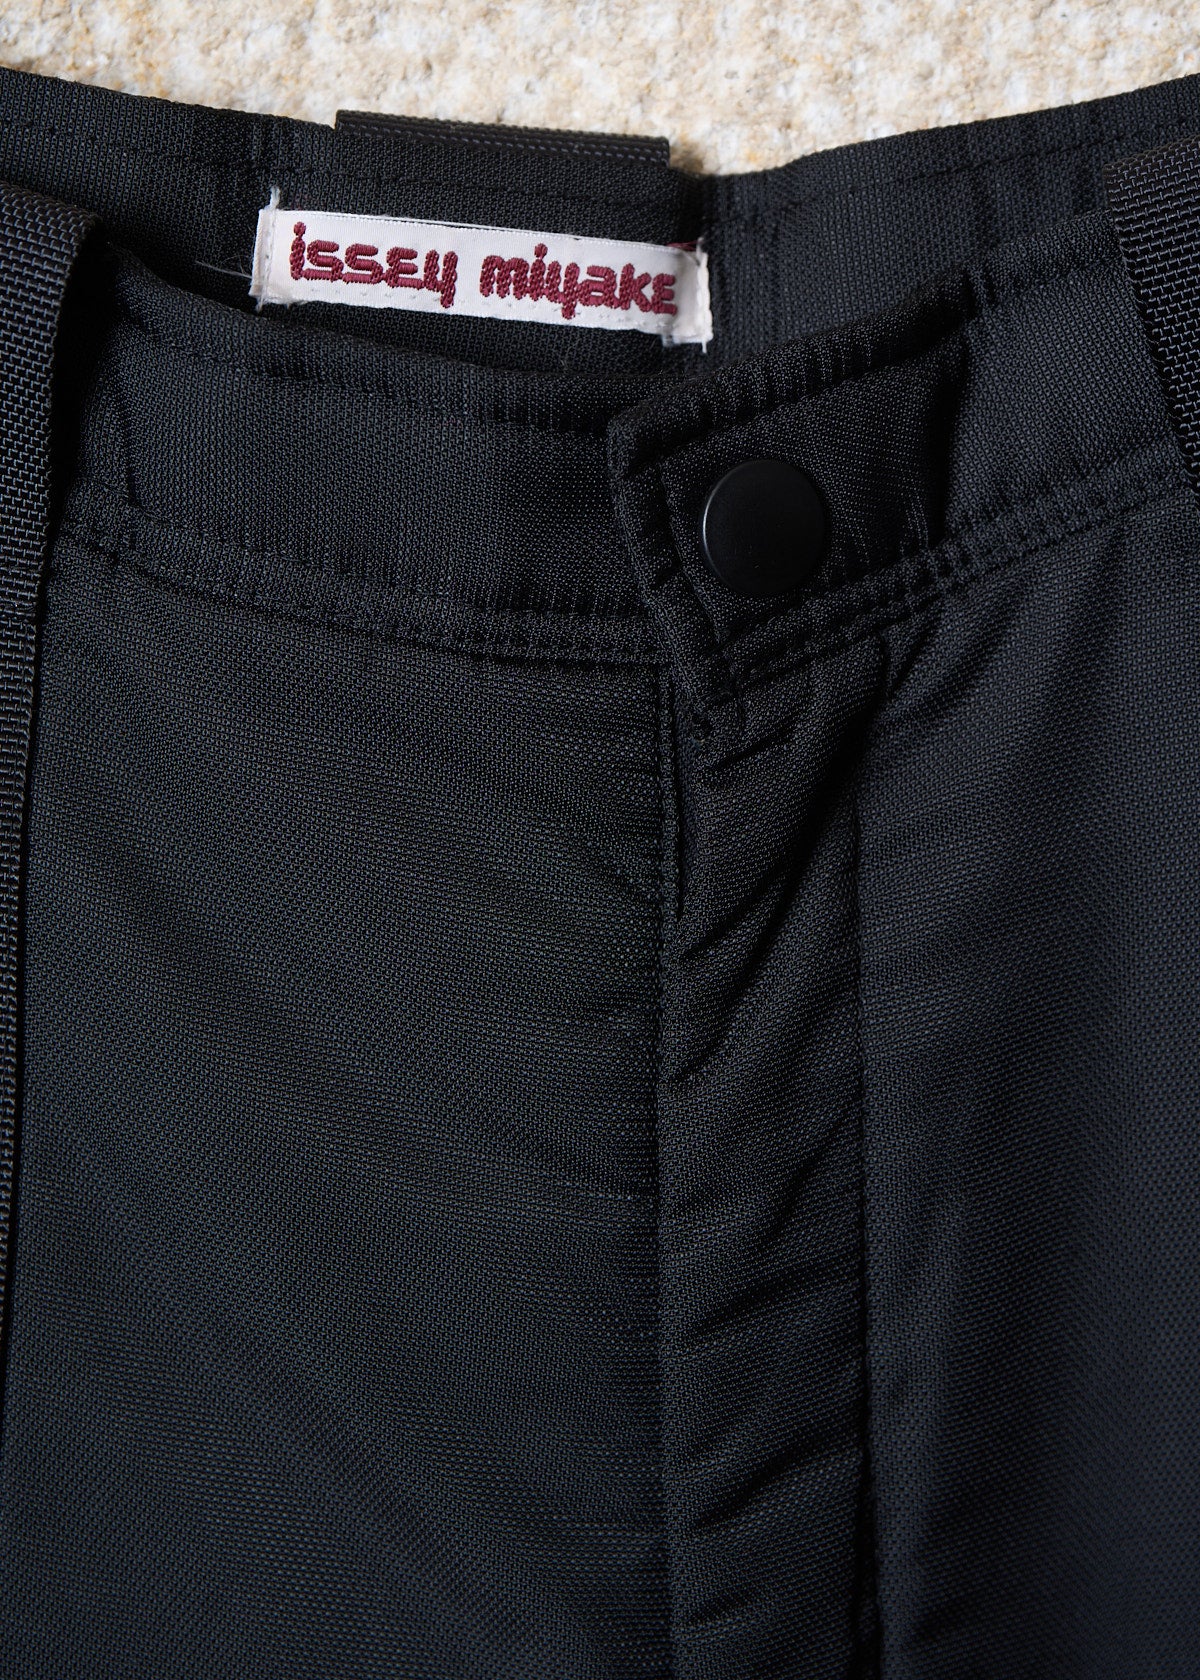 Black Nylon Contrast Pockets Parachute Pants 1980's - Small